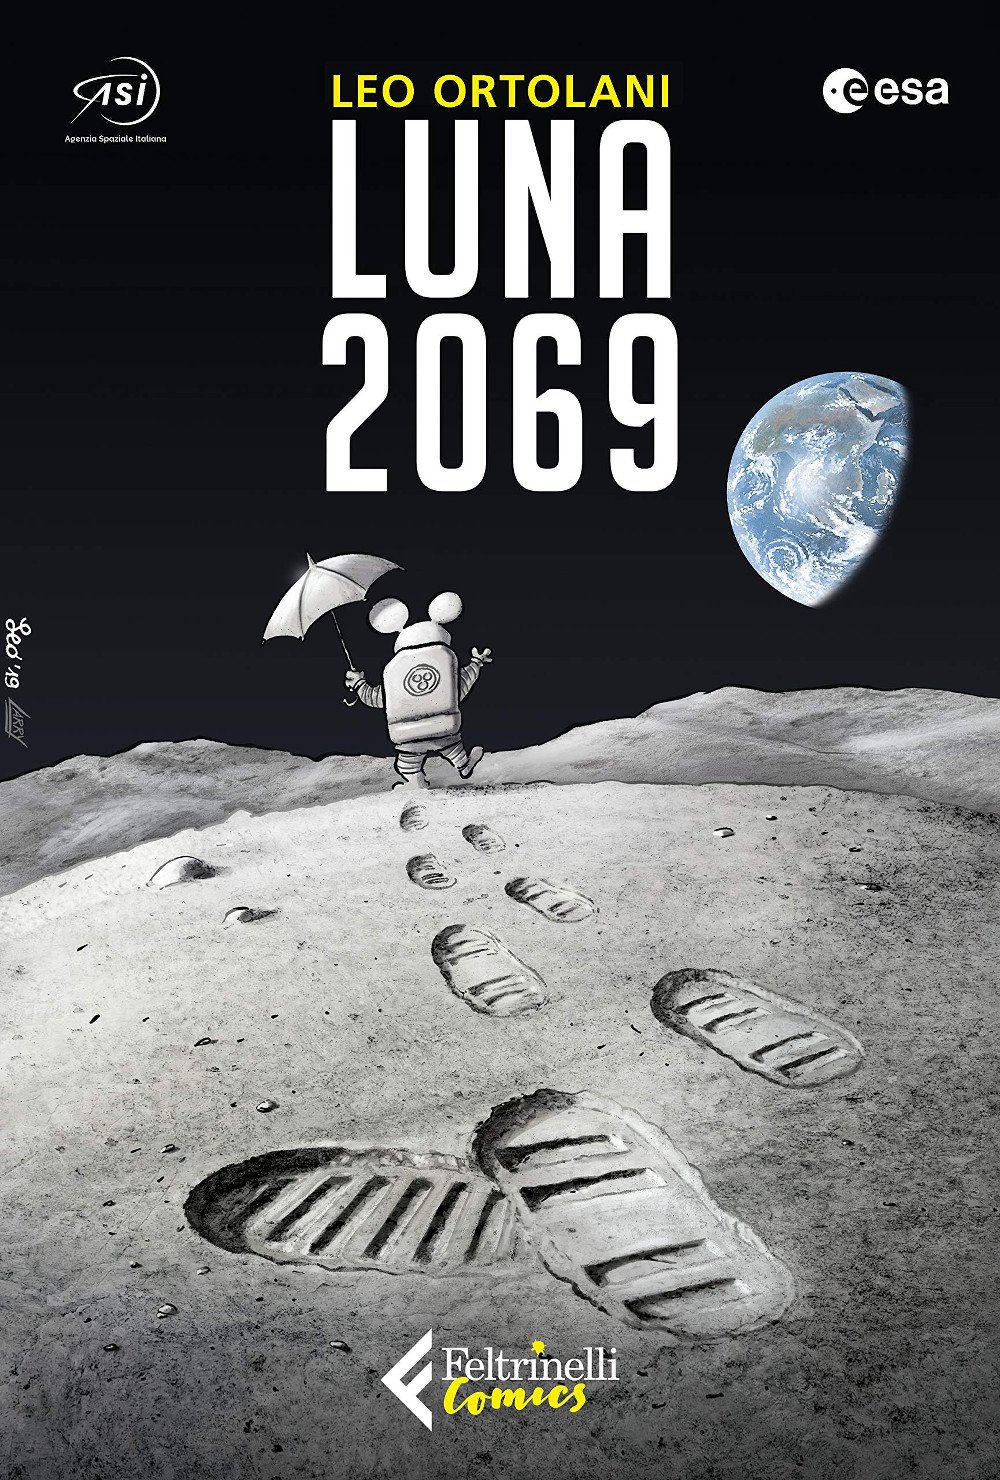 Leo Ortolani – Luna 2069 (Feltrinelli Comics, Milano 2019)